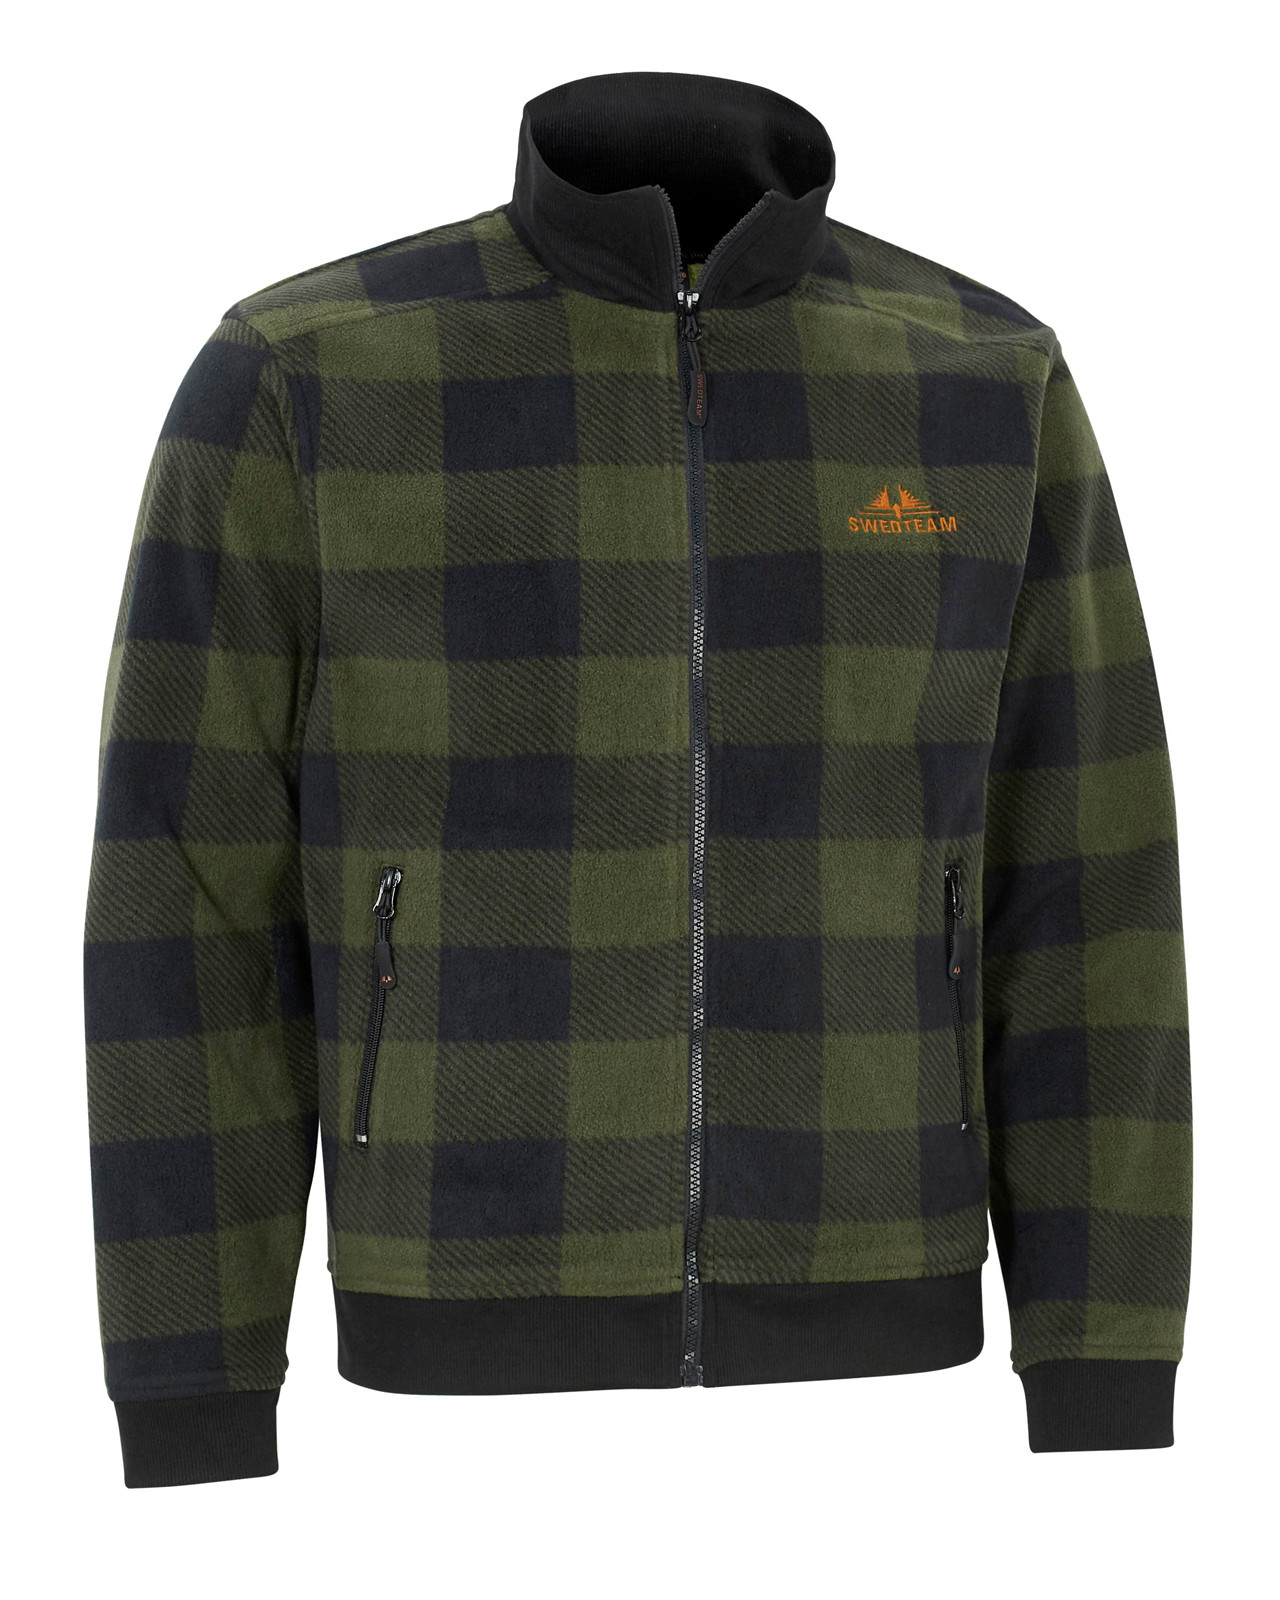 Se Swedteam Lynx sweater fullzip (Green, 3XL) hos Specialbutikken